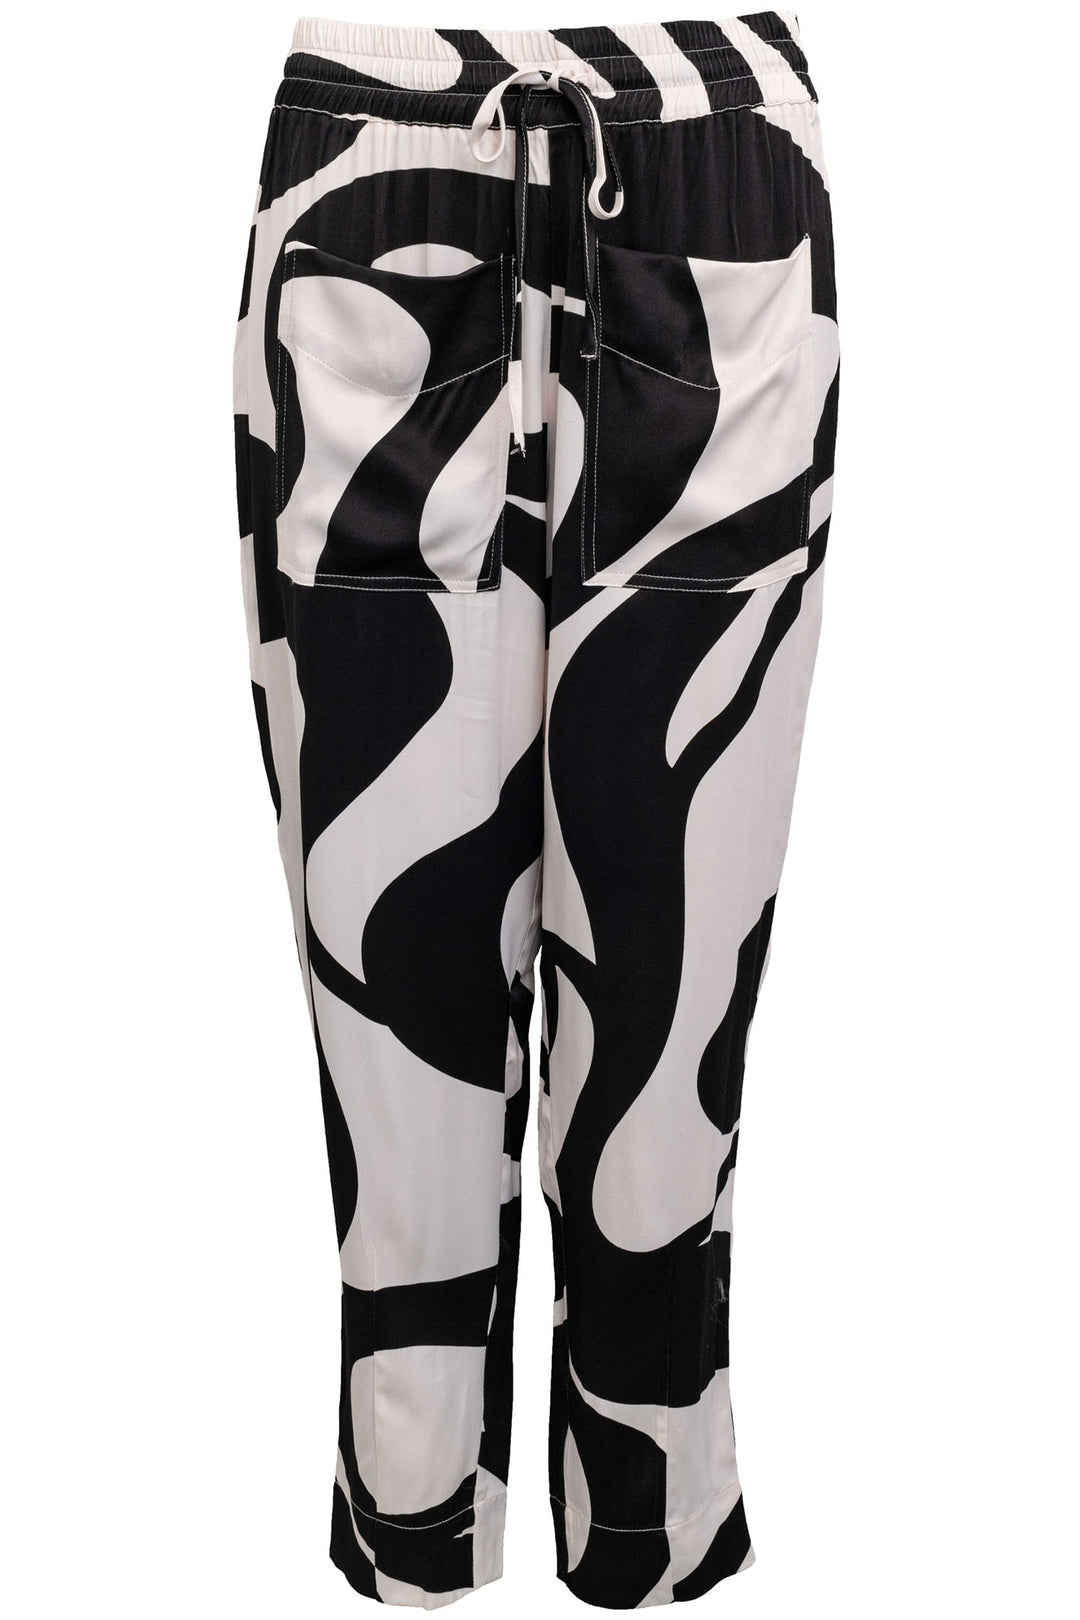 Costa Mani 2401410 Black White Monochrome Wave Nora Trousers - Experience Boutique